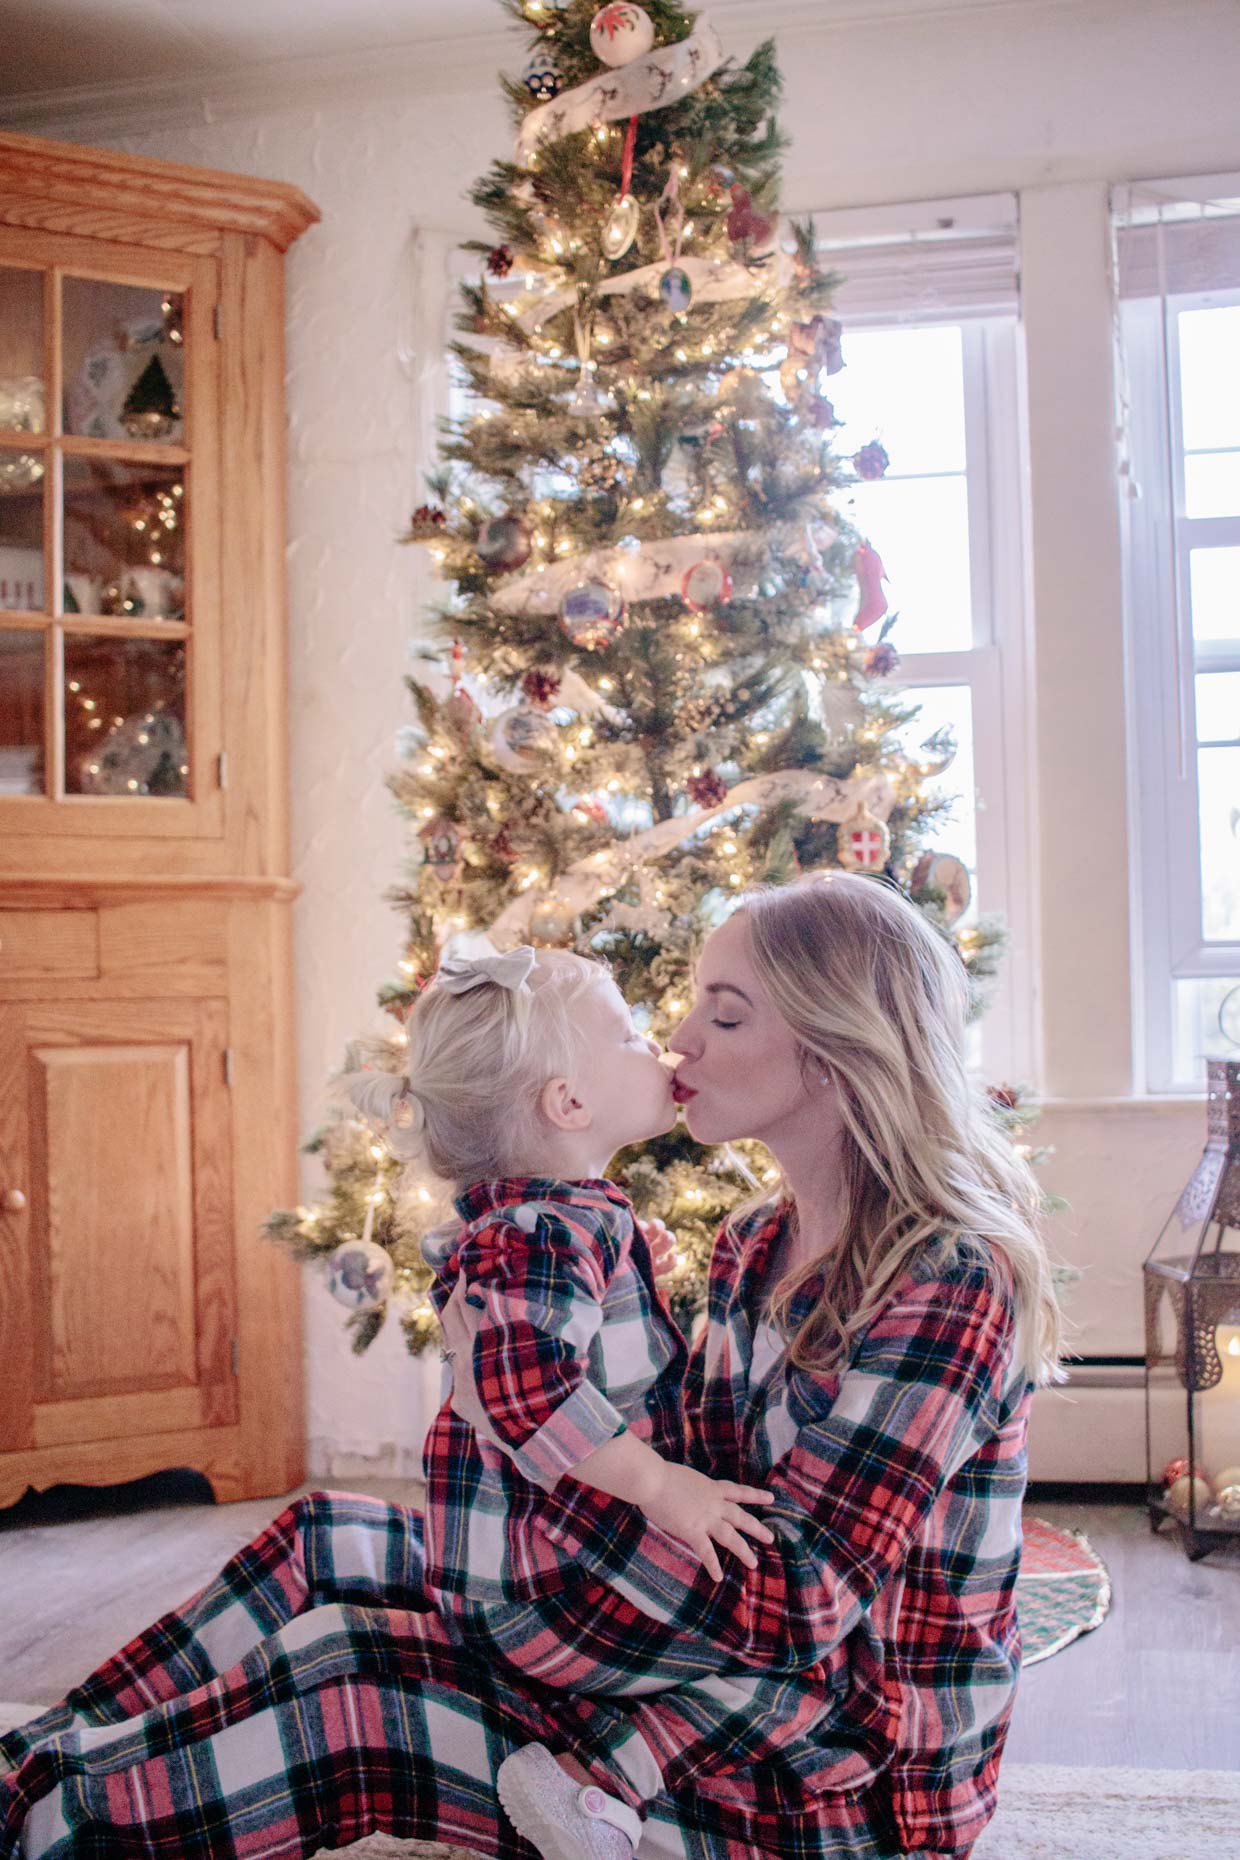 Meagan Brandon fashion blogger of Meagan's Moda wears matching Christmas family pajamas from Old Navy with toddler daughter tartan plaid family pajamas